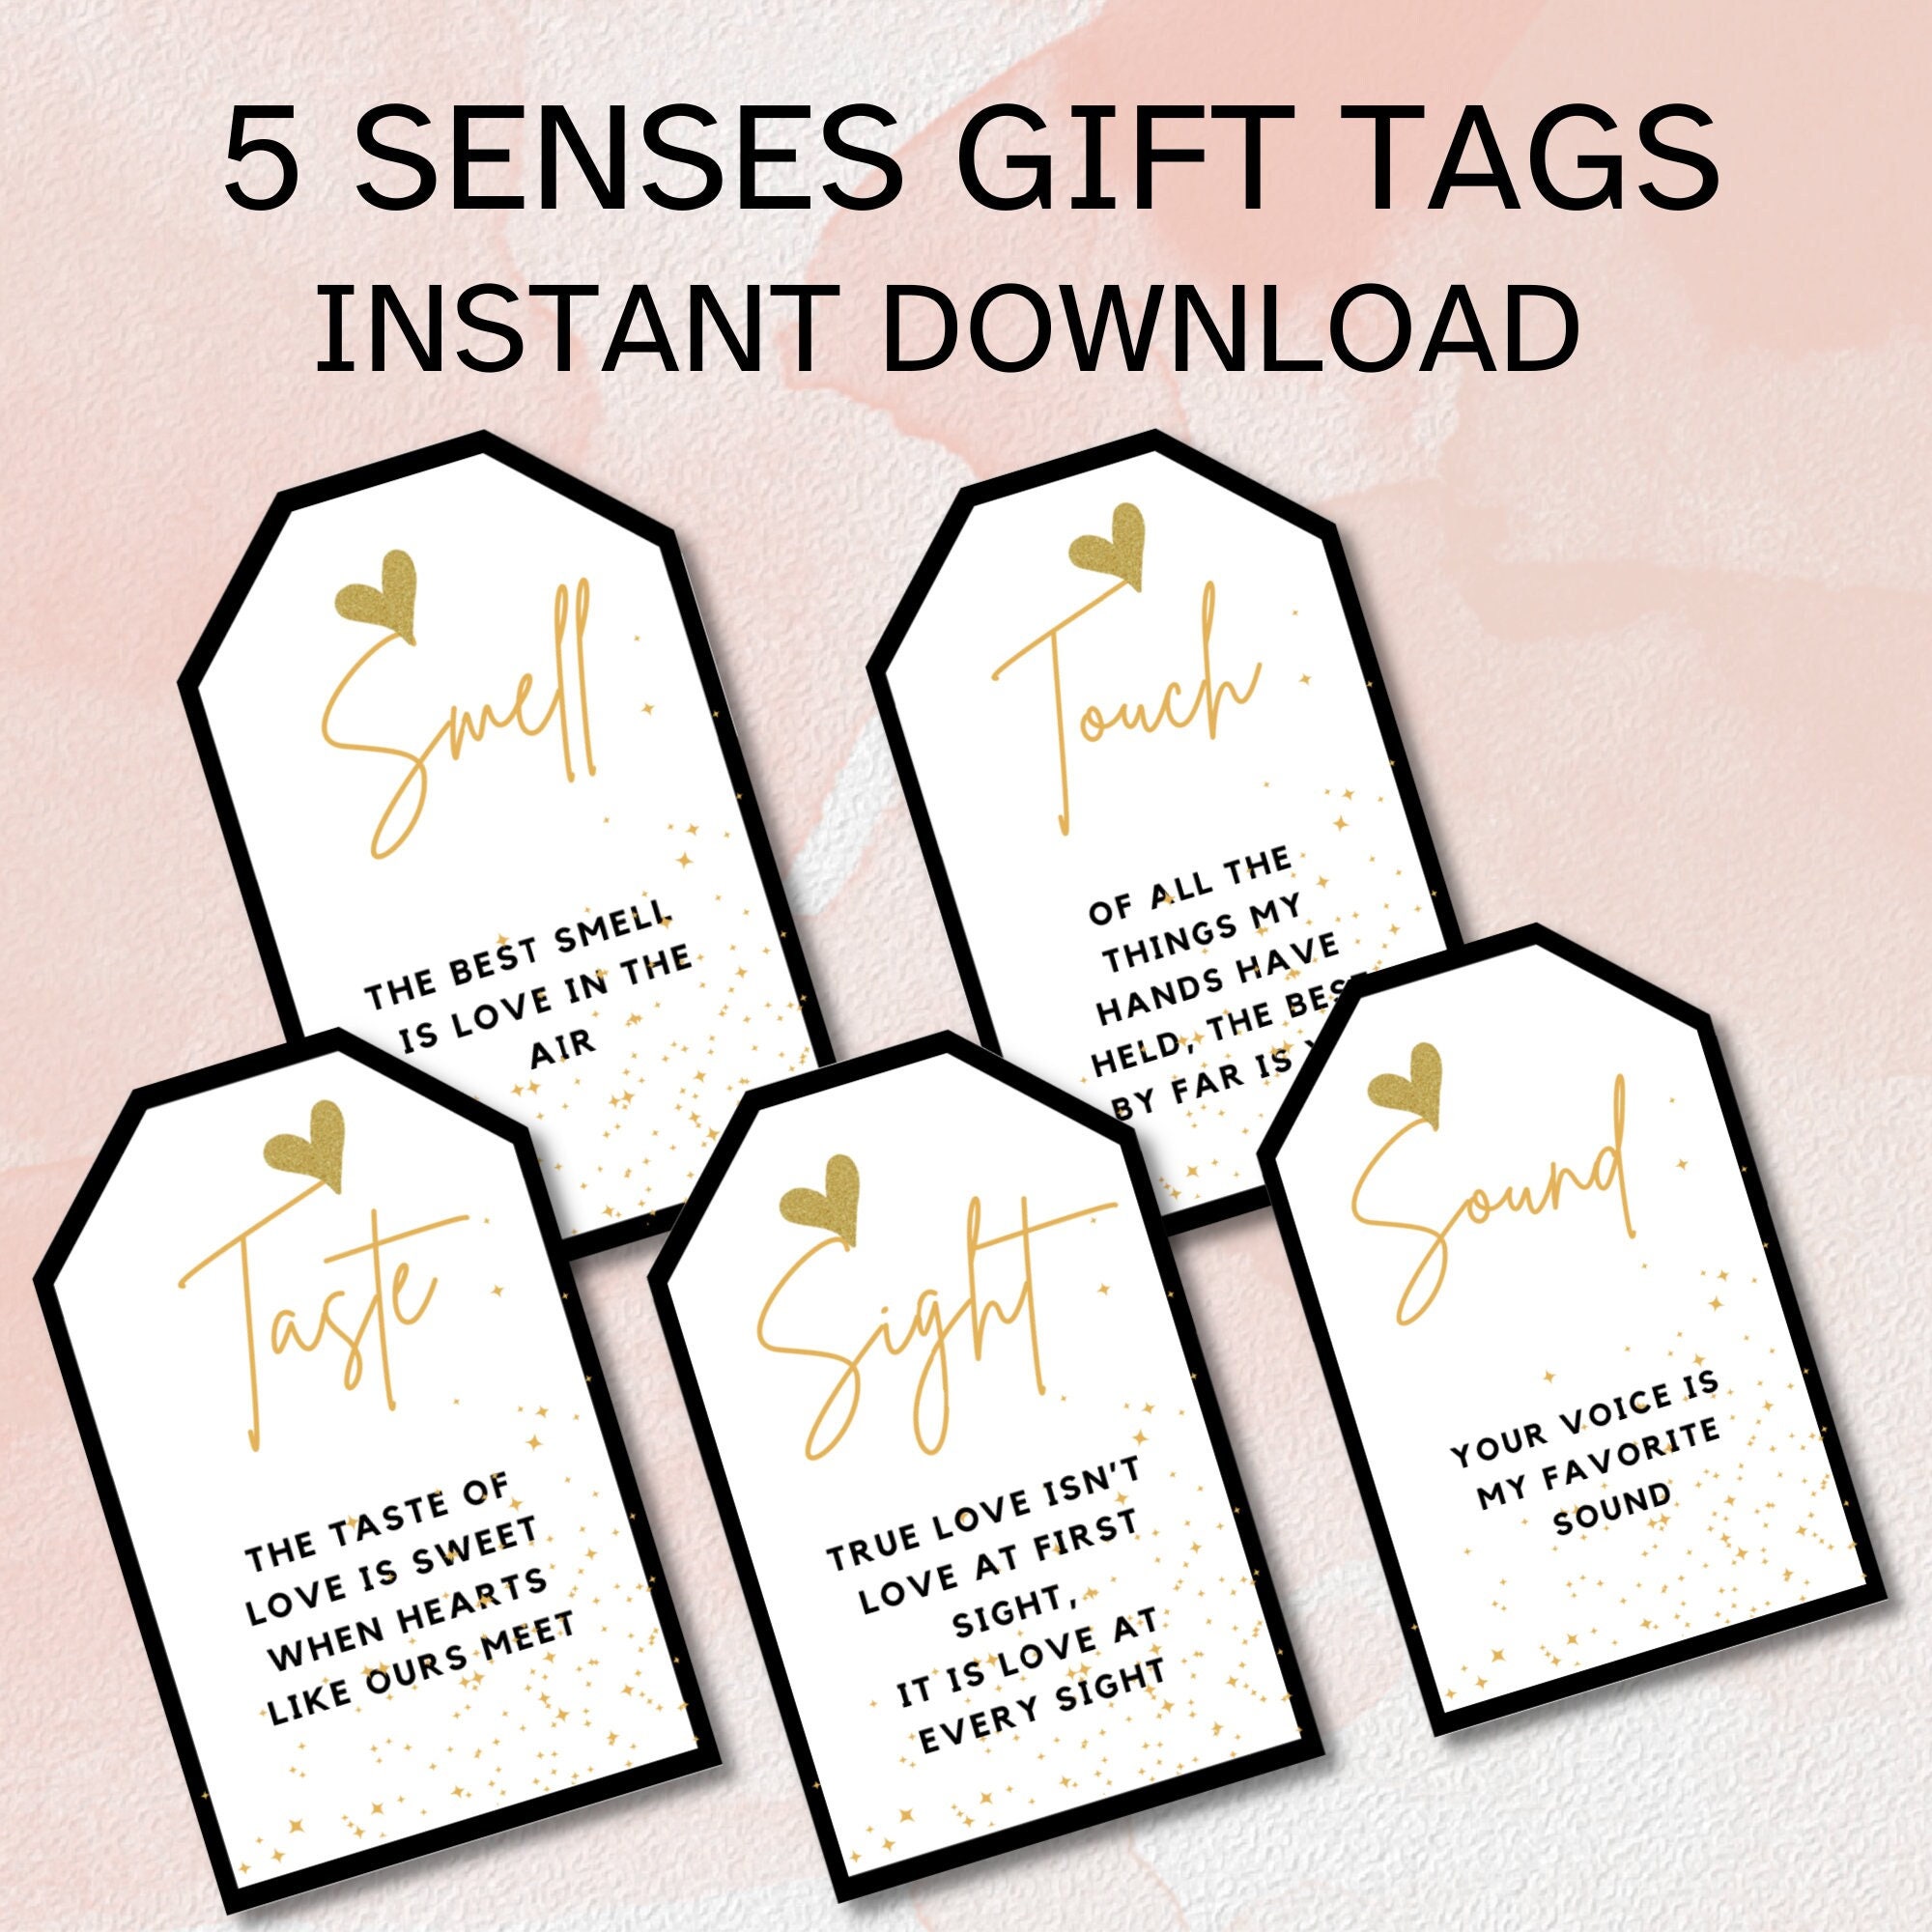 88+ Practical 5 Senses Gift Ideas for Him